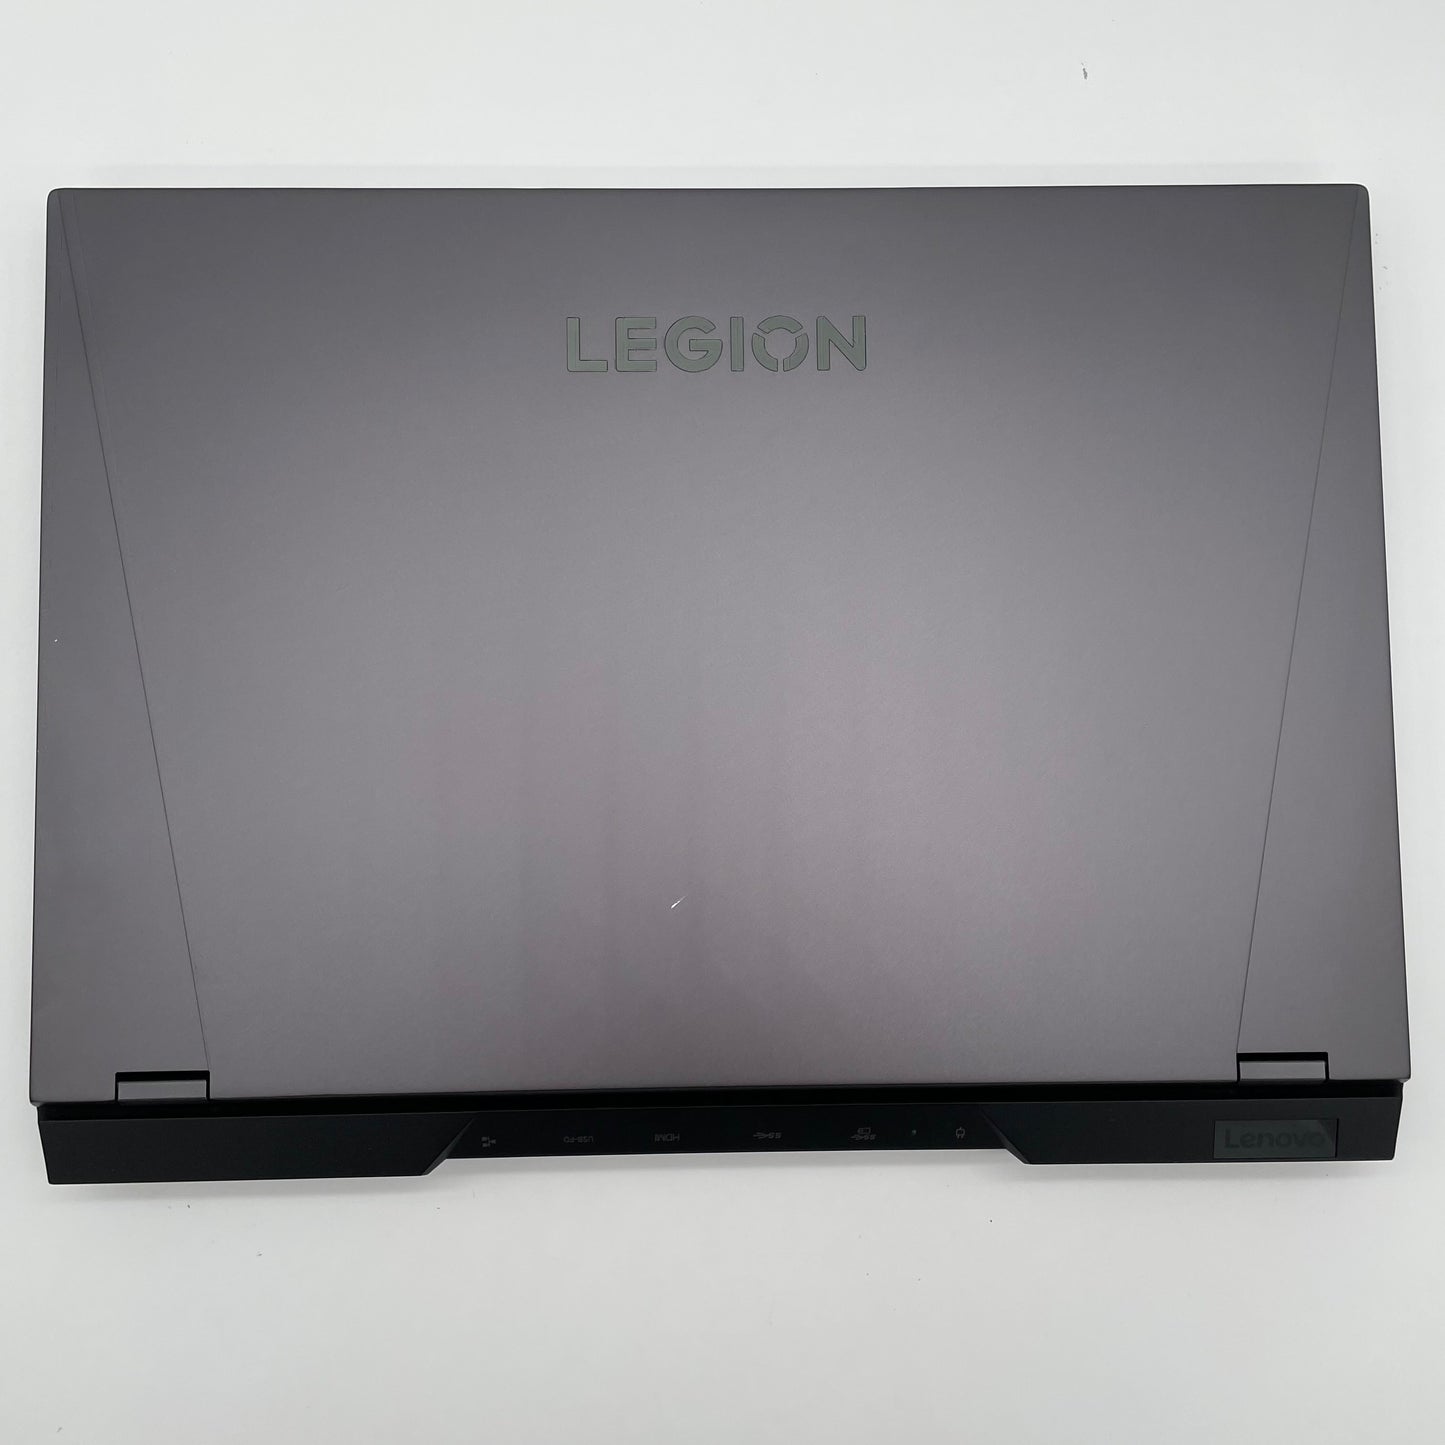 Lenovo Legion 5 Pro 16IAH7H 16" i7-12700H 2.3GHz 16GB RAM 2TB SSD RTX 3070 Ti